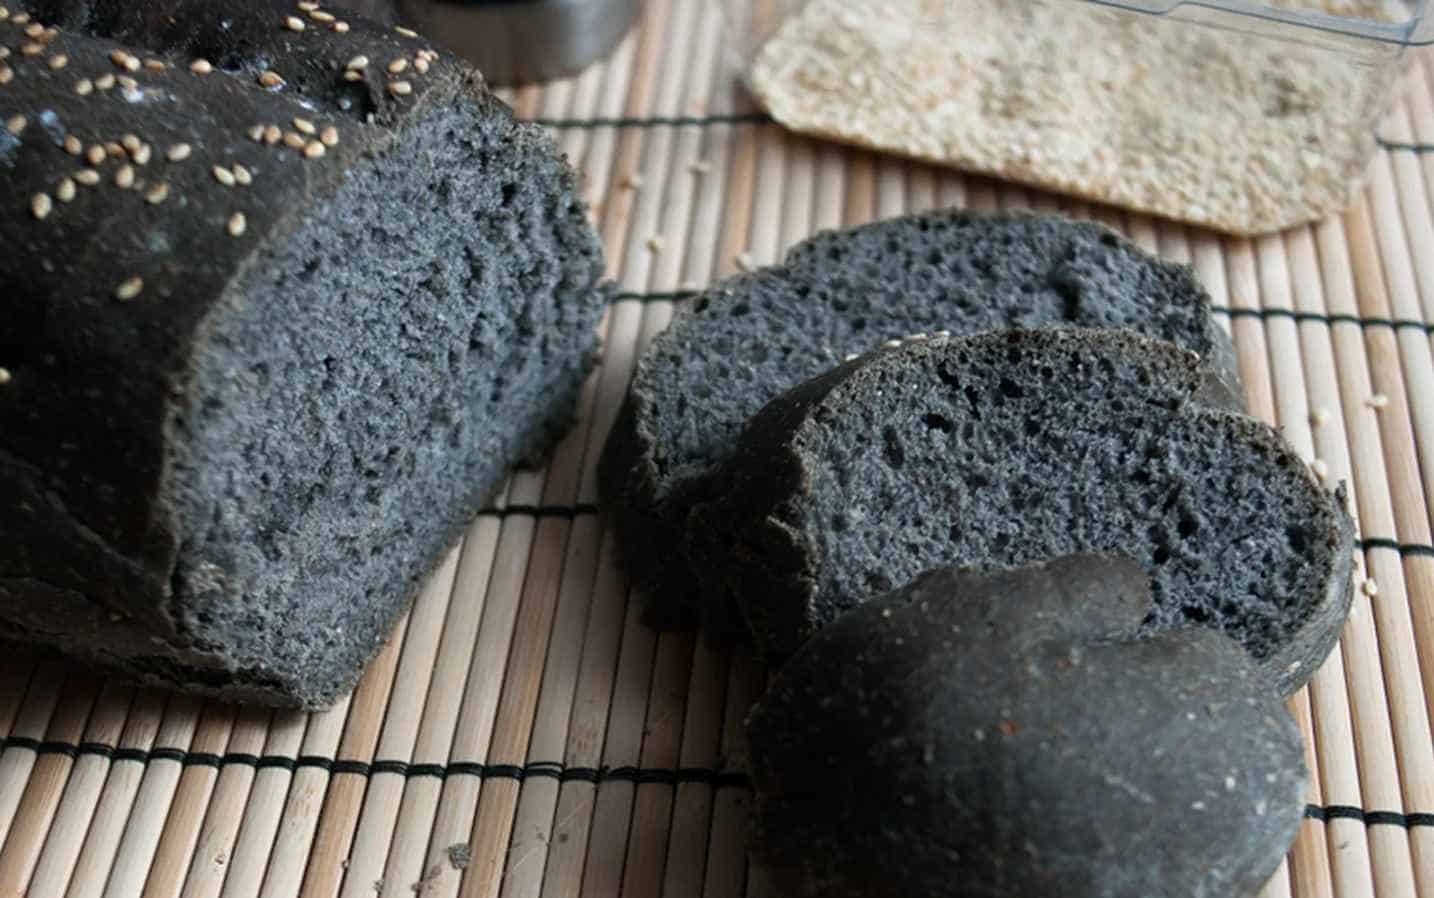 vegan bread recipes bread machine